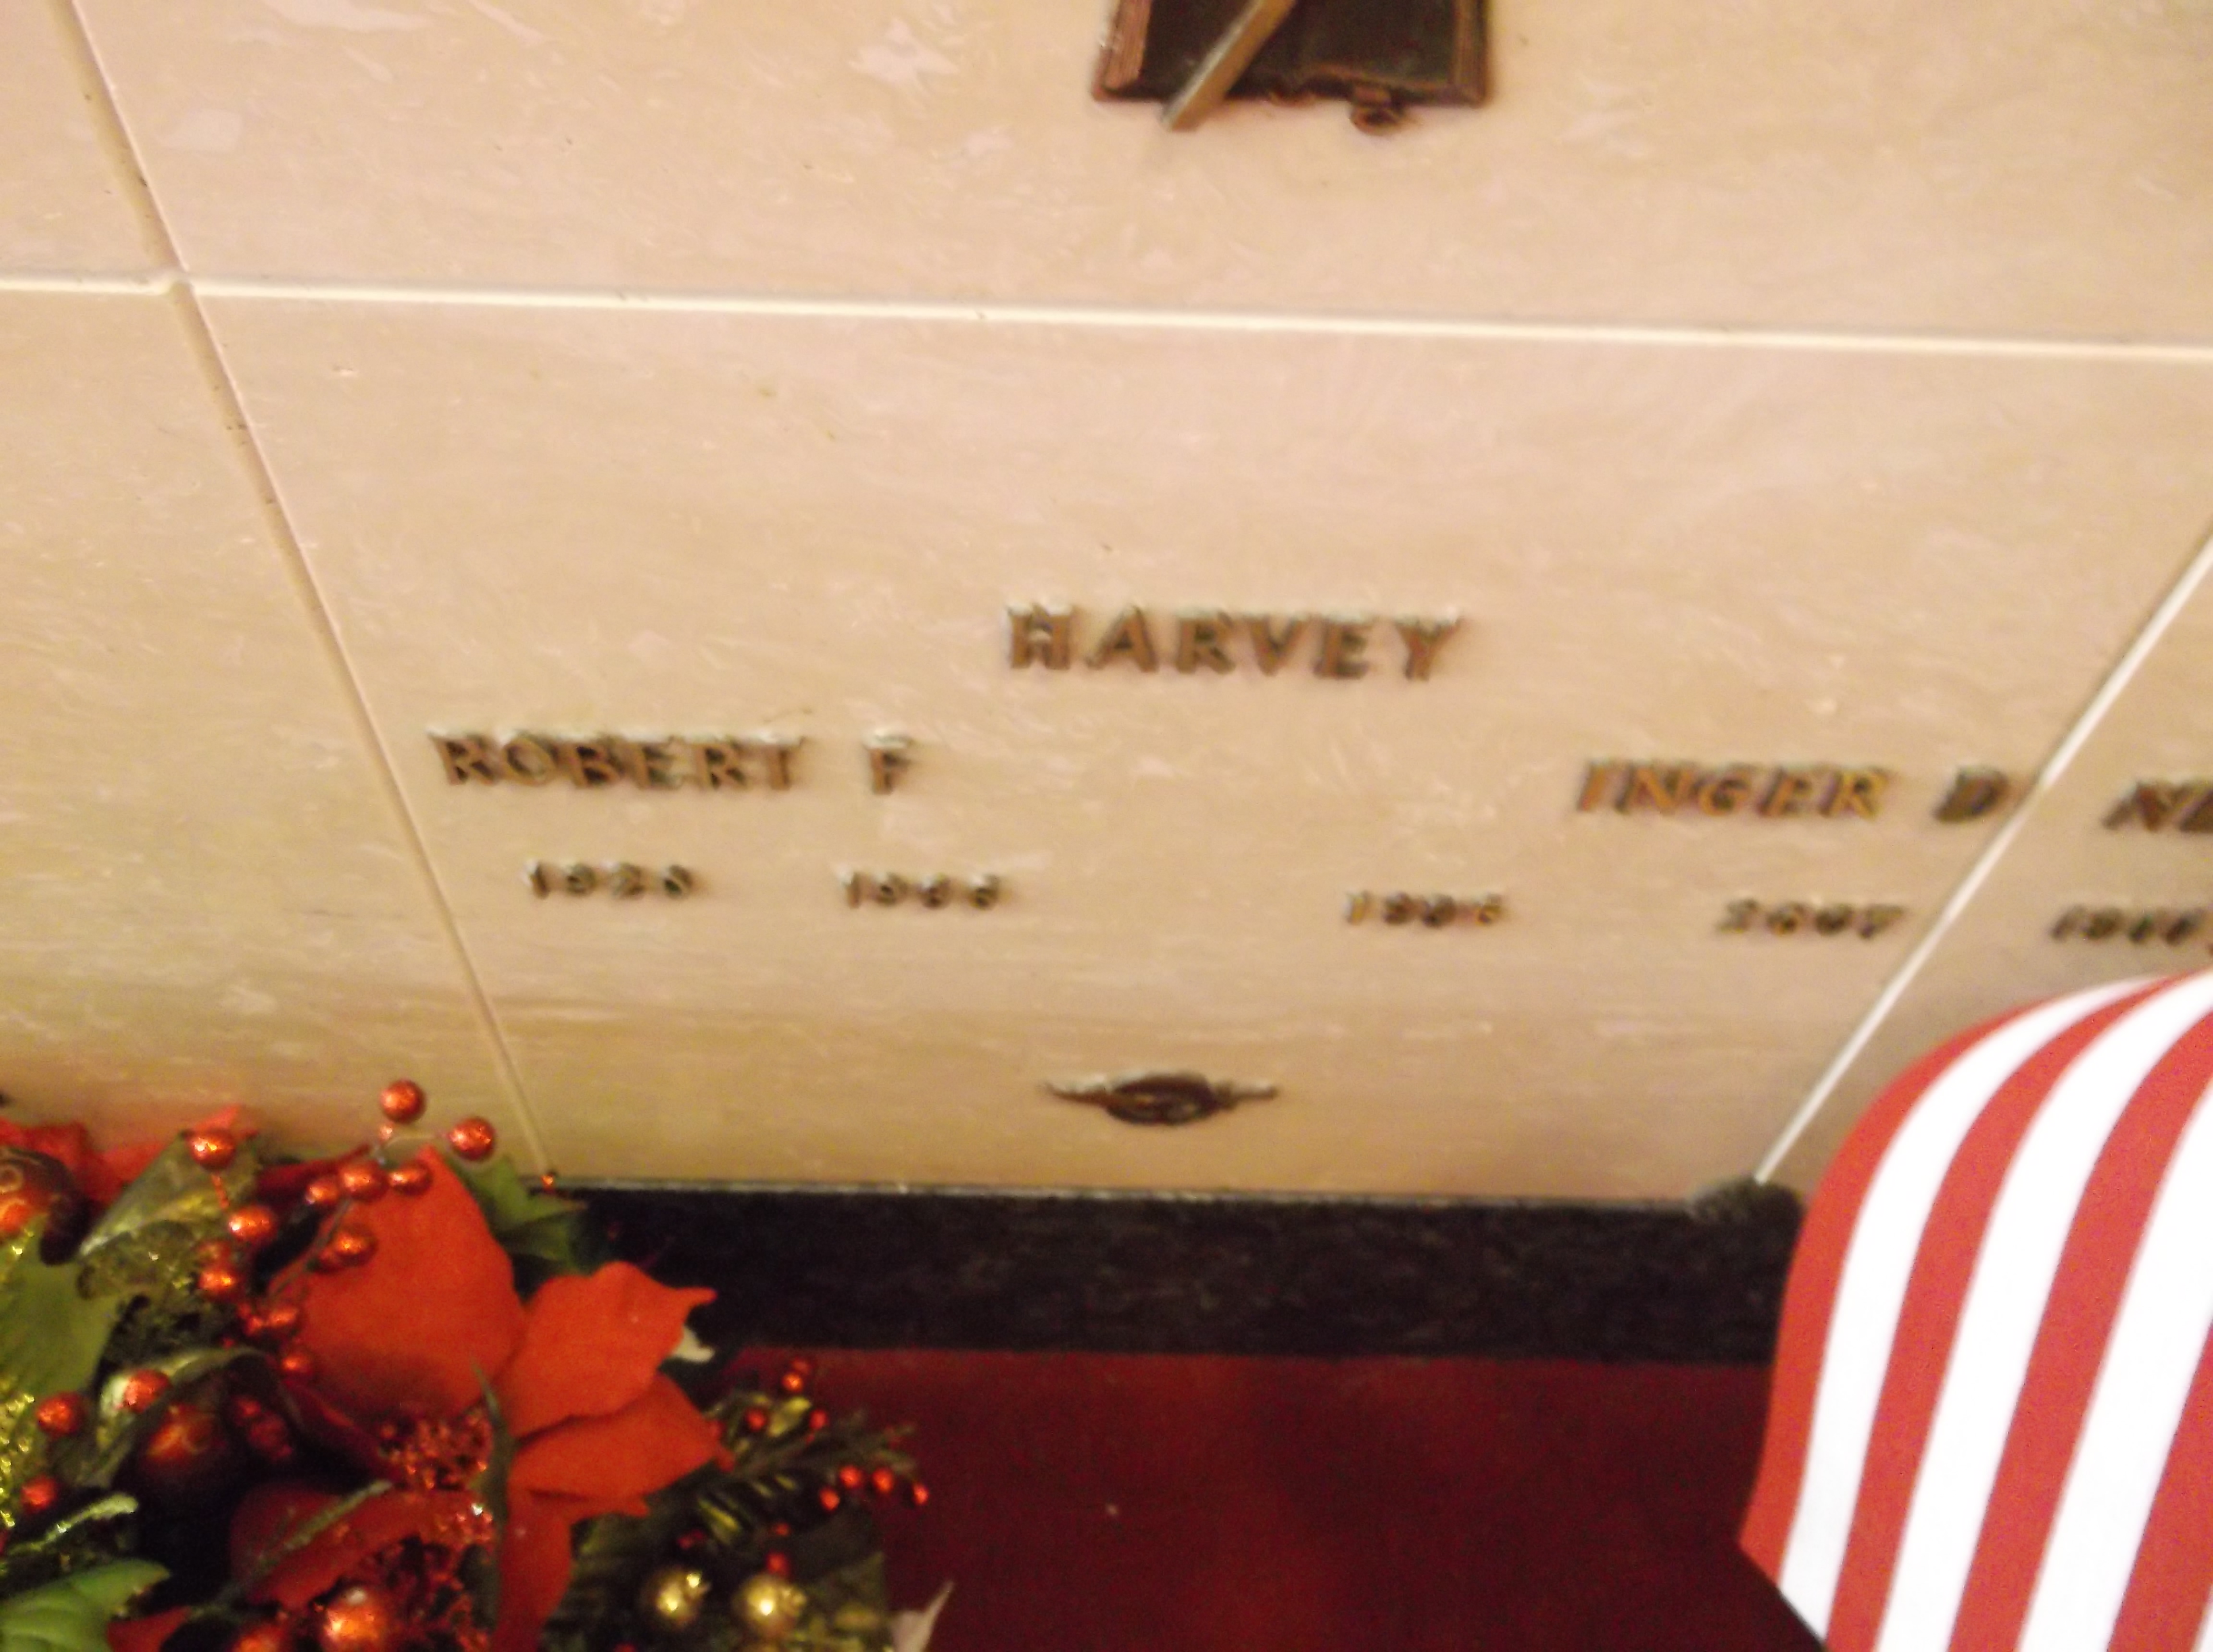 Robert F Harvey